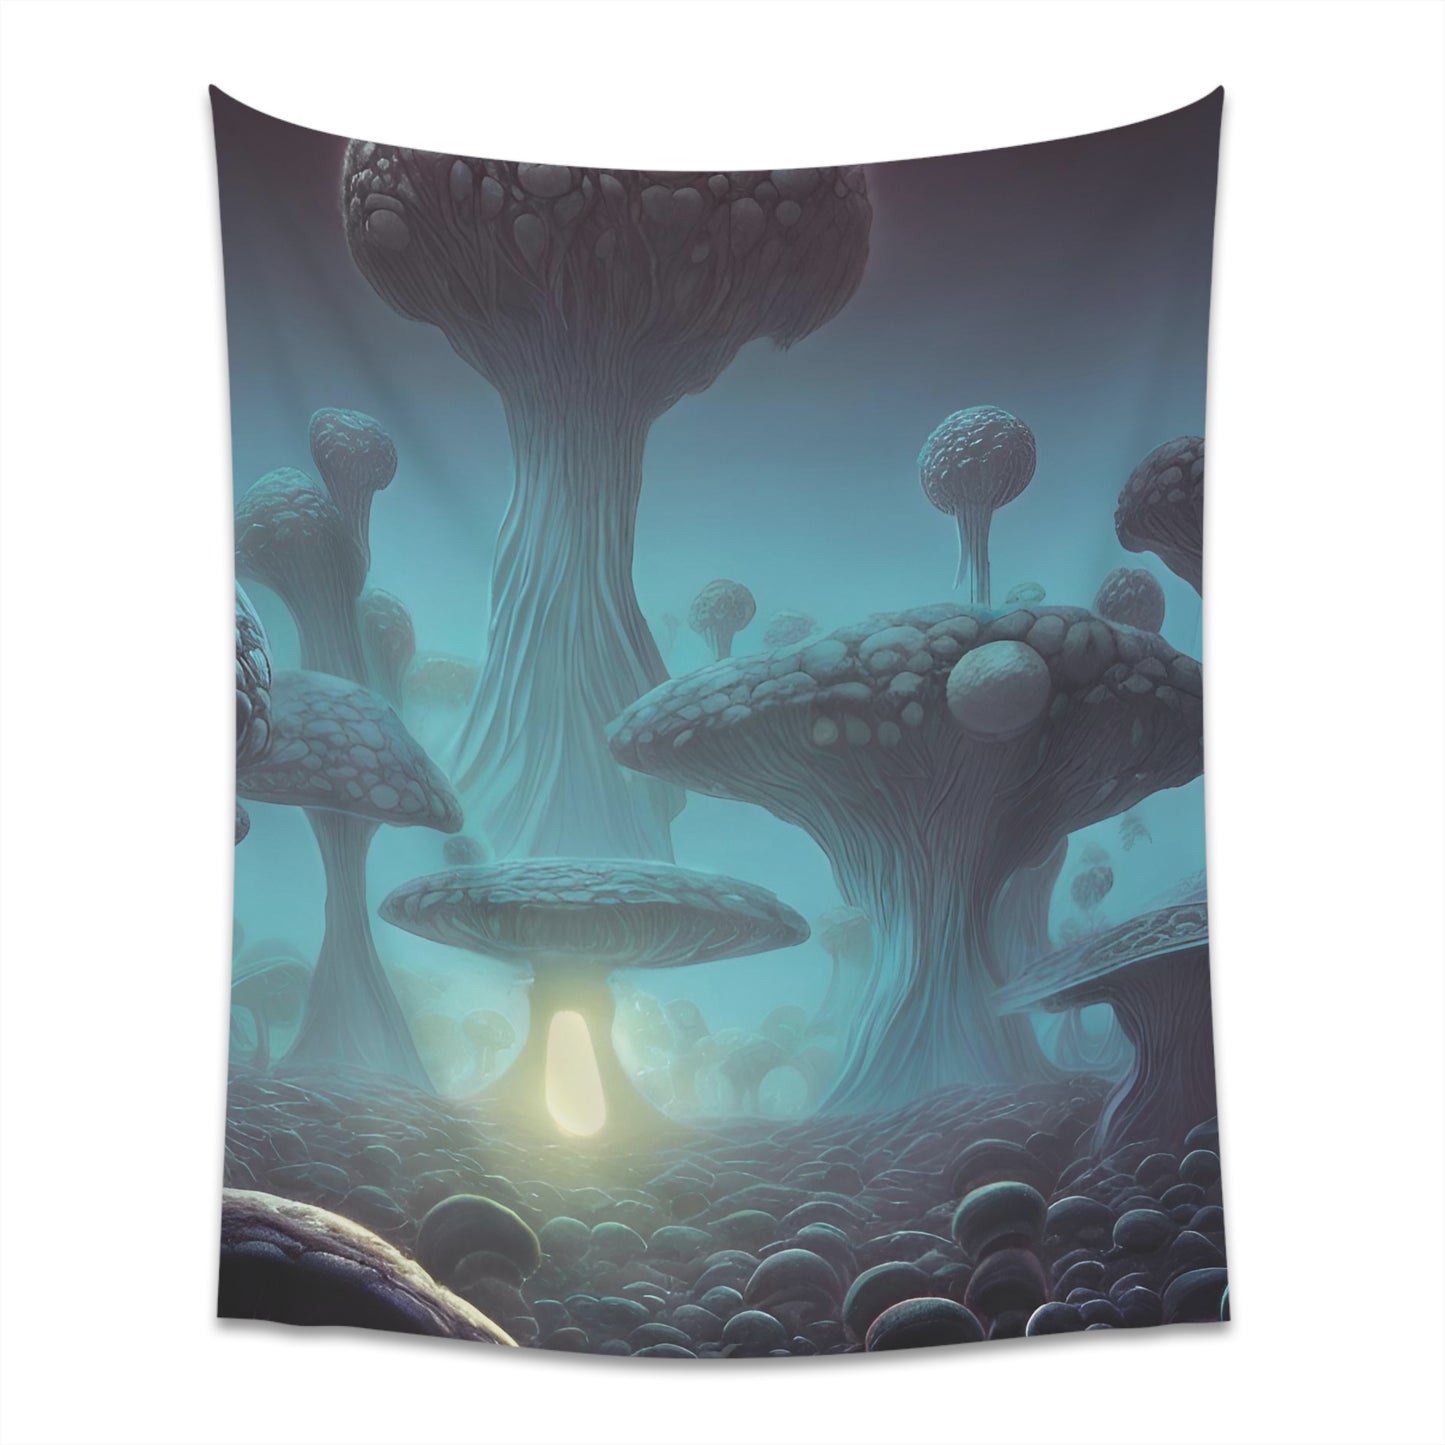 Mushroom Fields 1 Printed Wall Tapestry